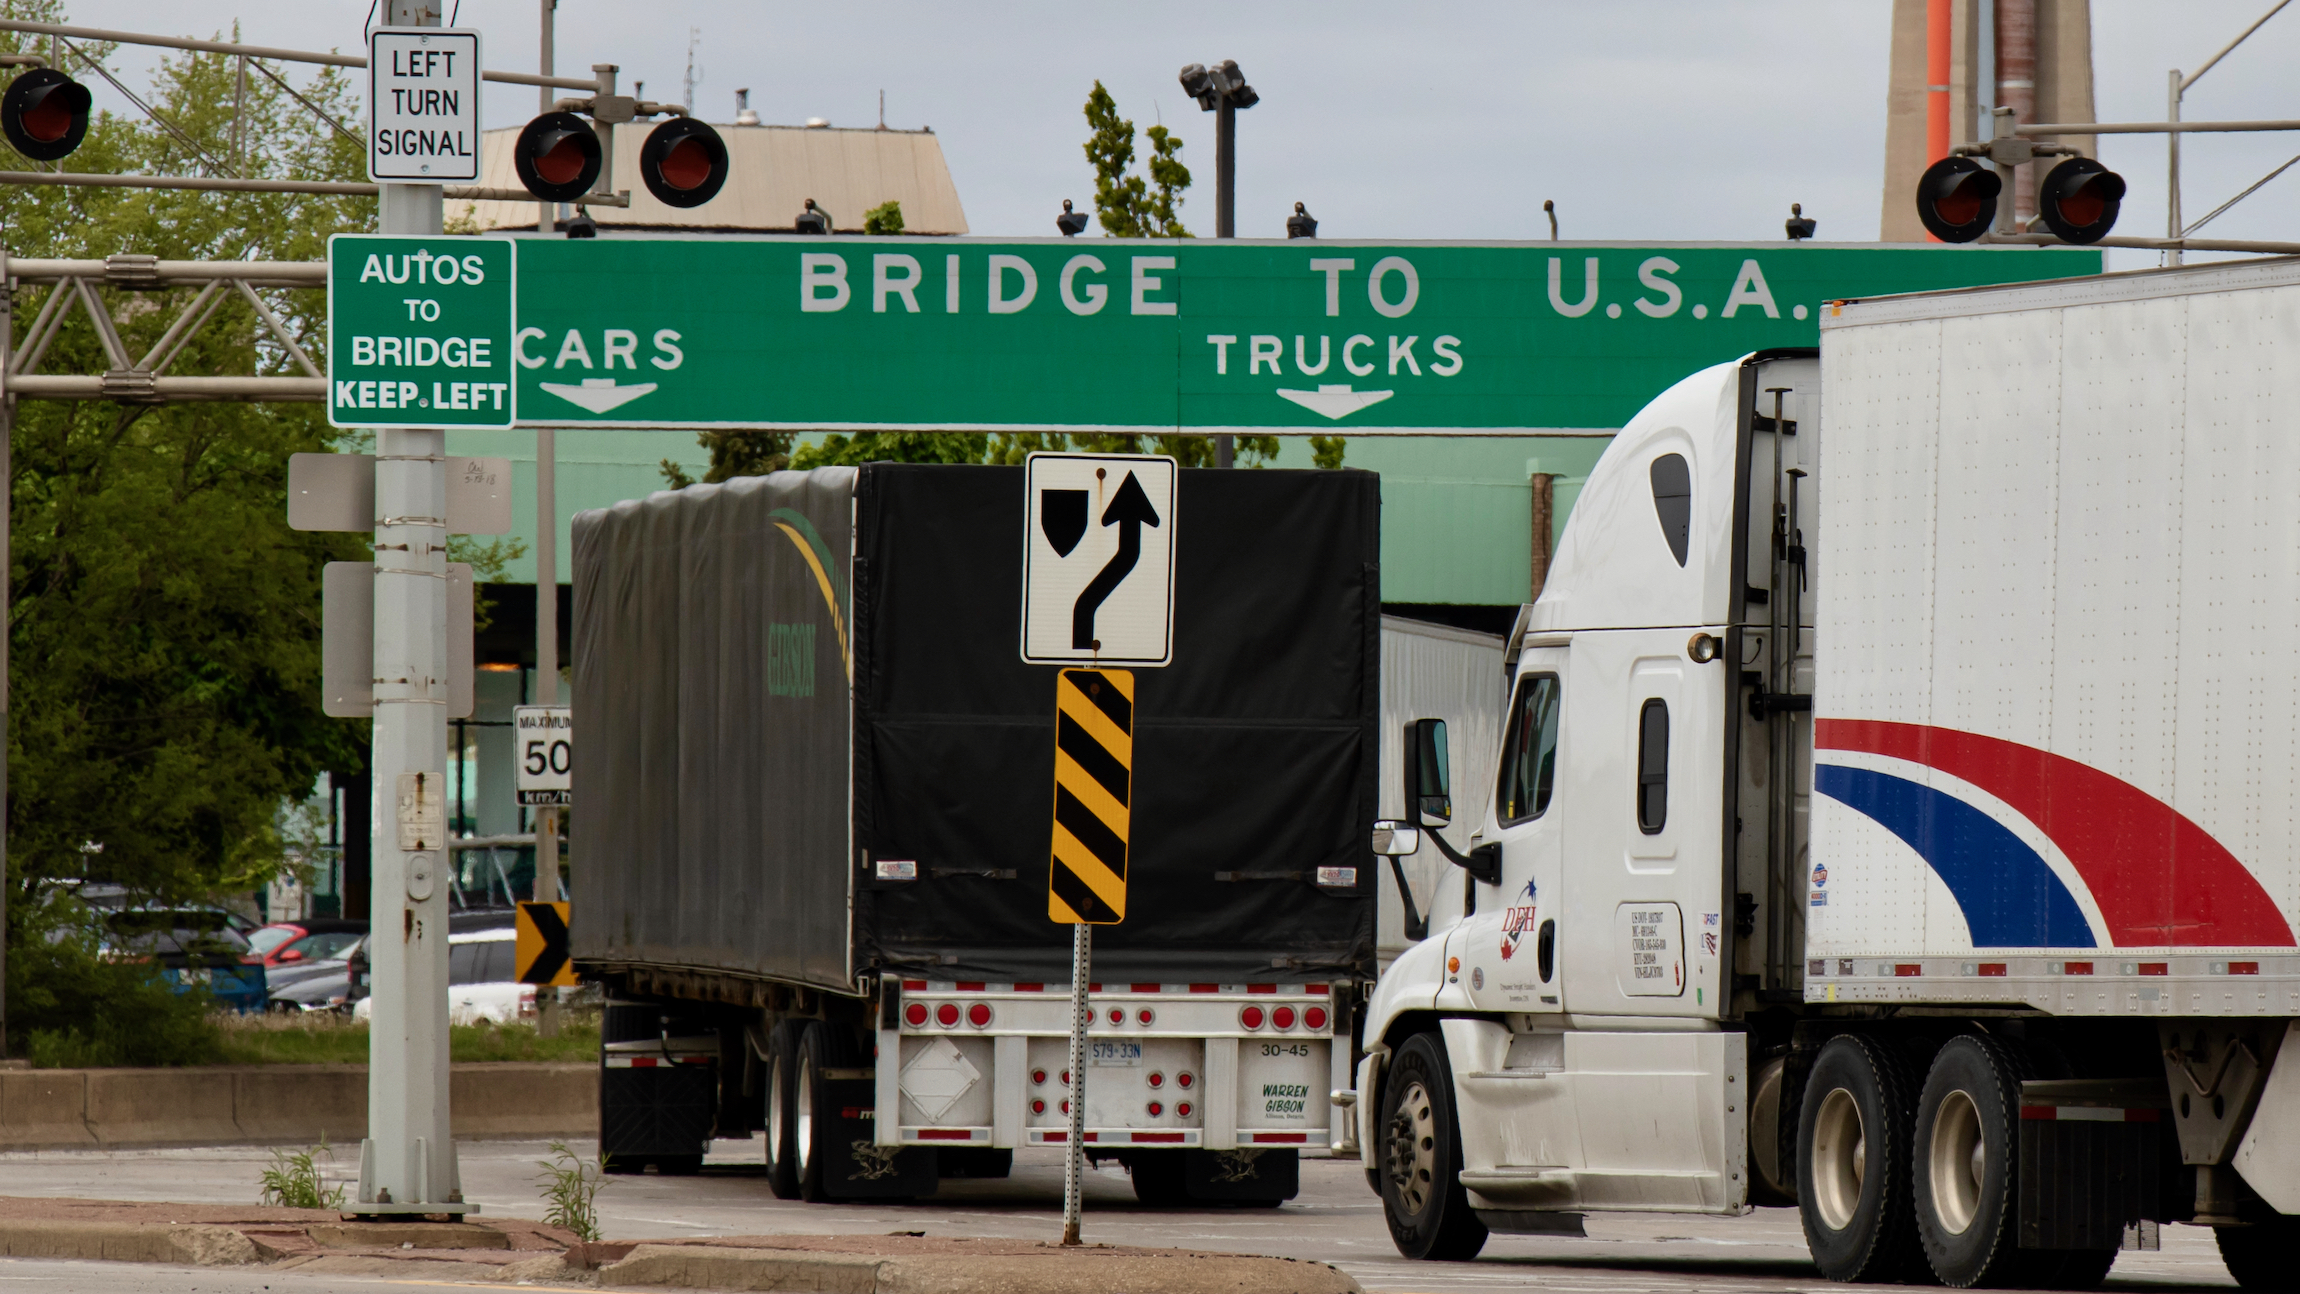 ansport trucks pass under a "Bridge To USA" at the entrance to the Ambassador Bridge, US-Canada border crossing.